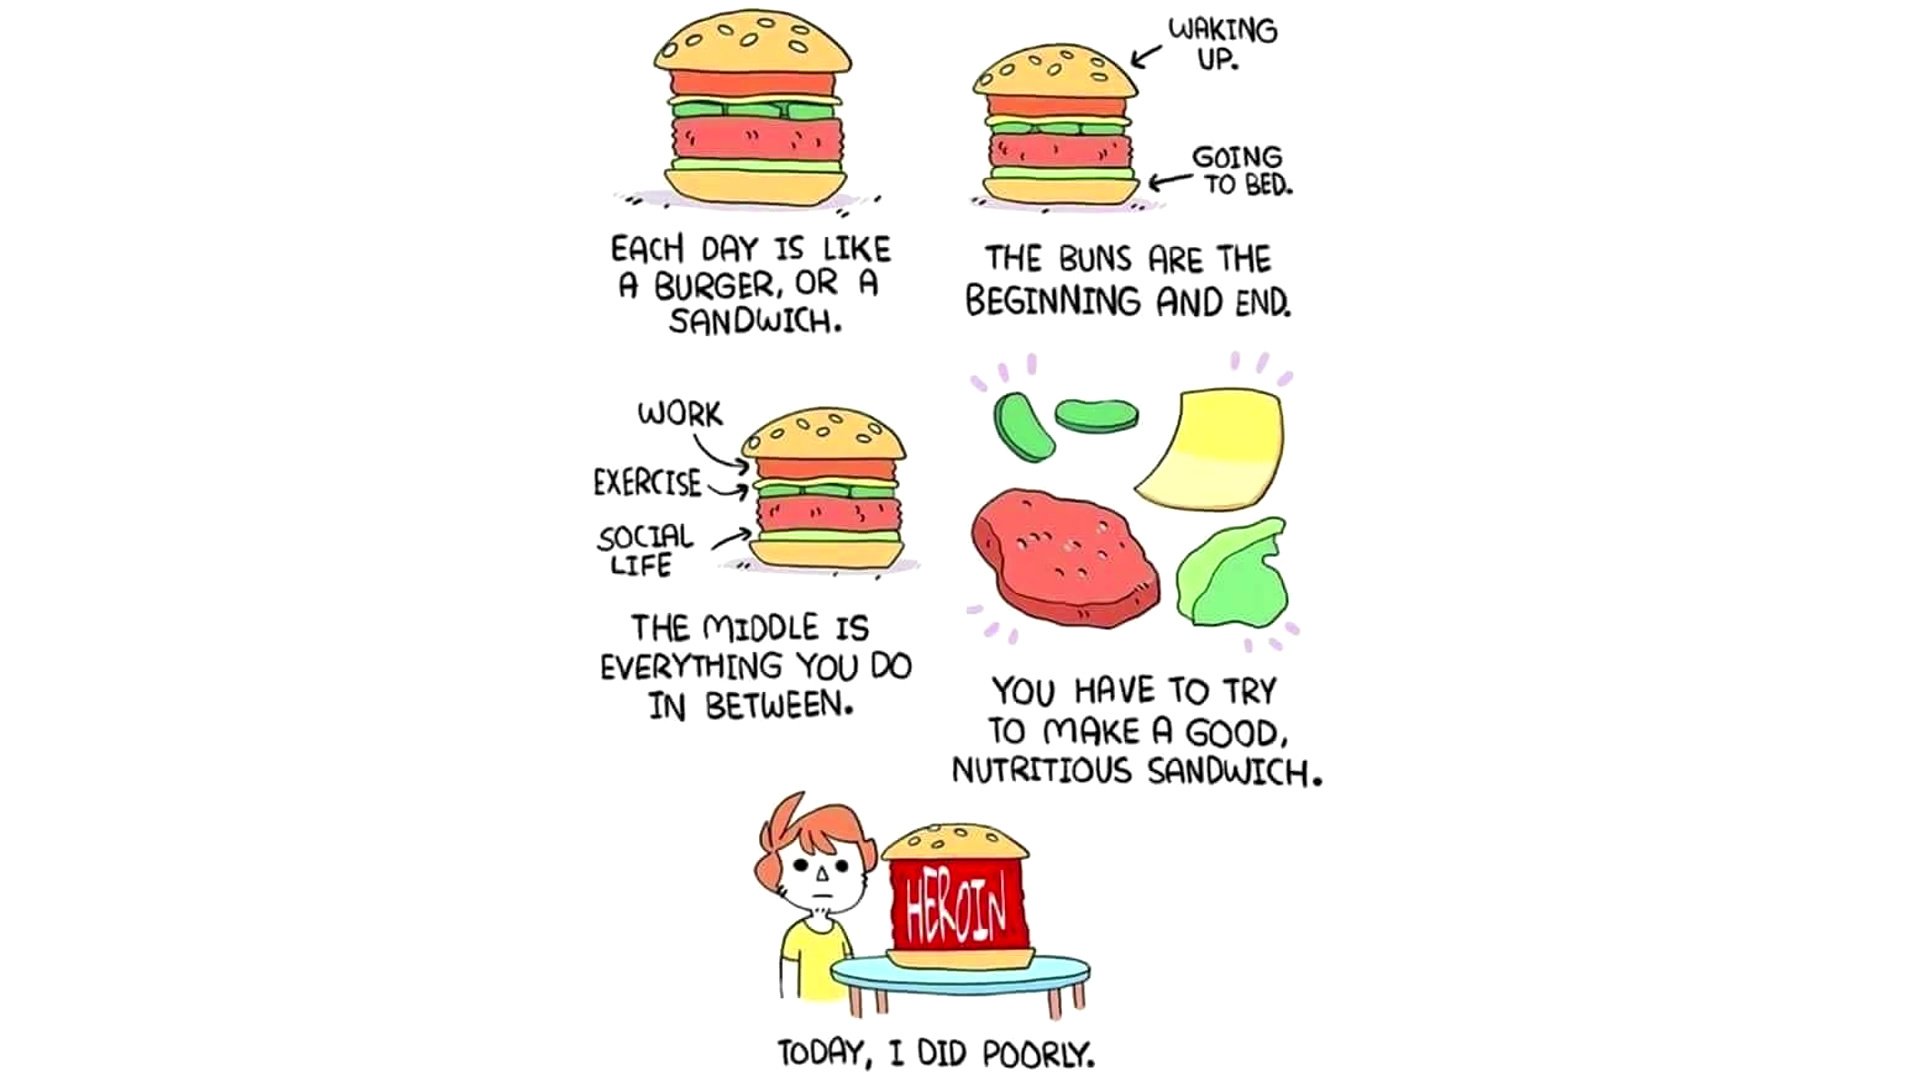 Burger - meme